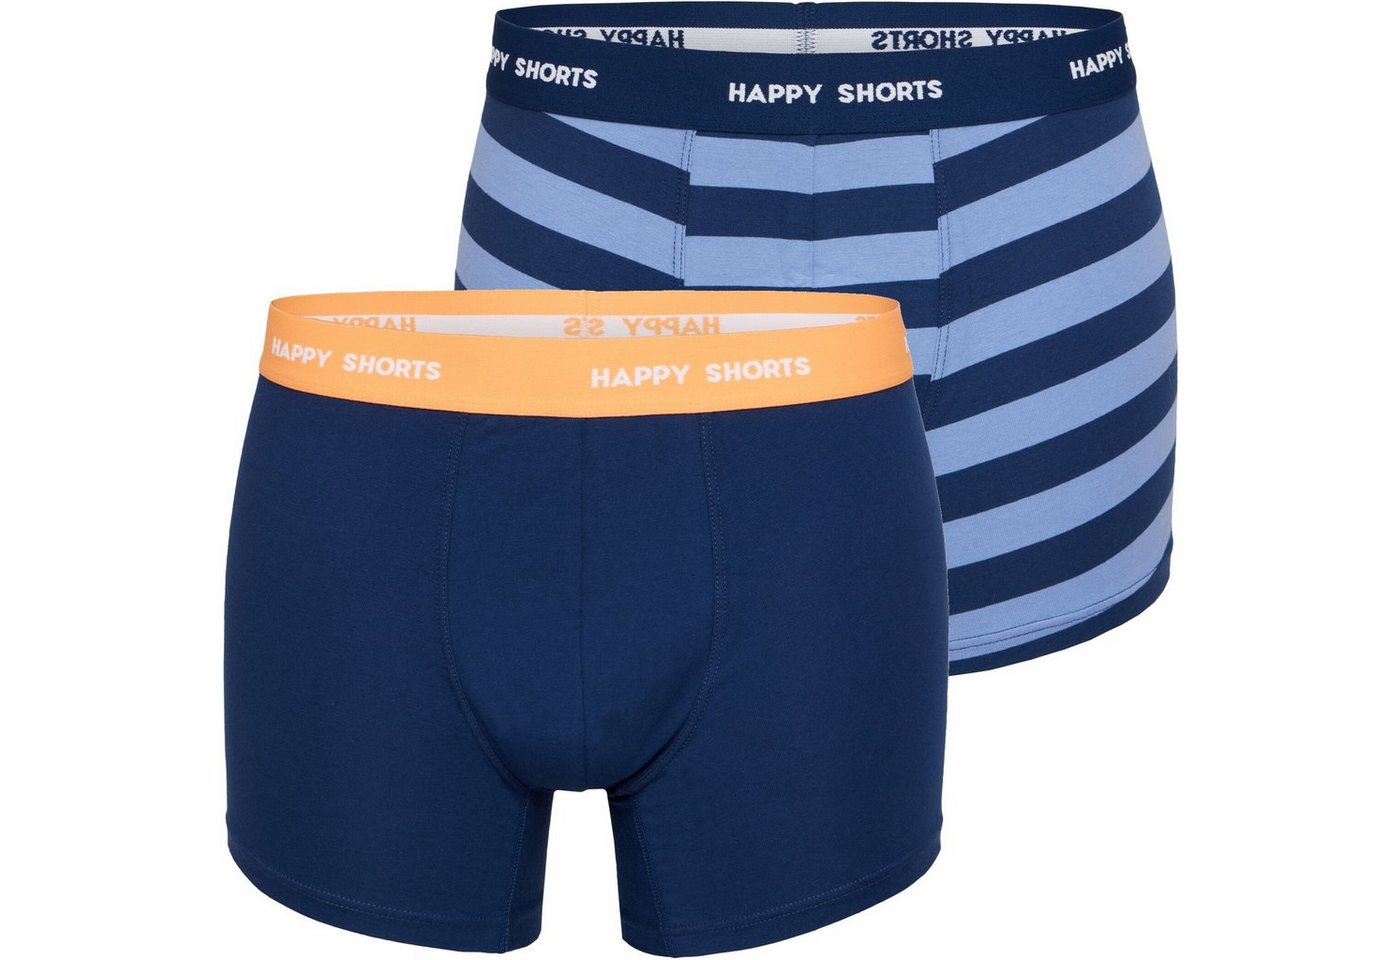 HAPPY SHORTS Trunk 2 Happy Shorts Jersey Trunk Herren Boxershorts Pant Blau Streifen (1-St) von HAPPY SHORTS